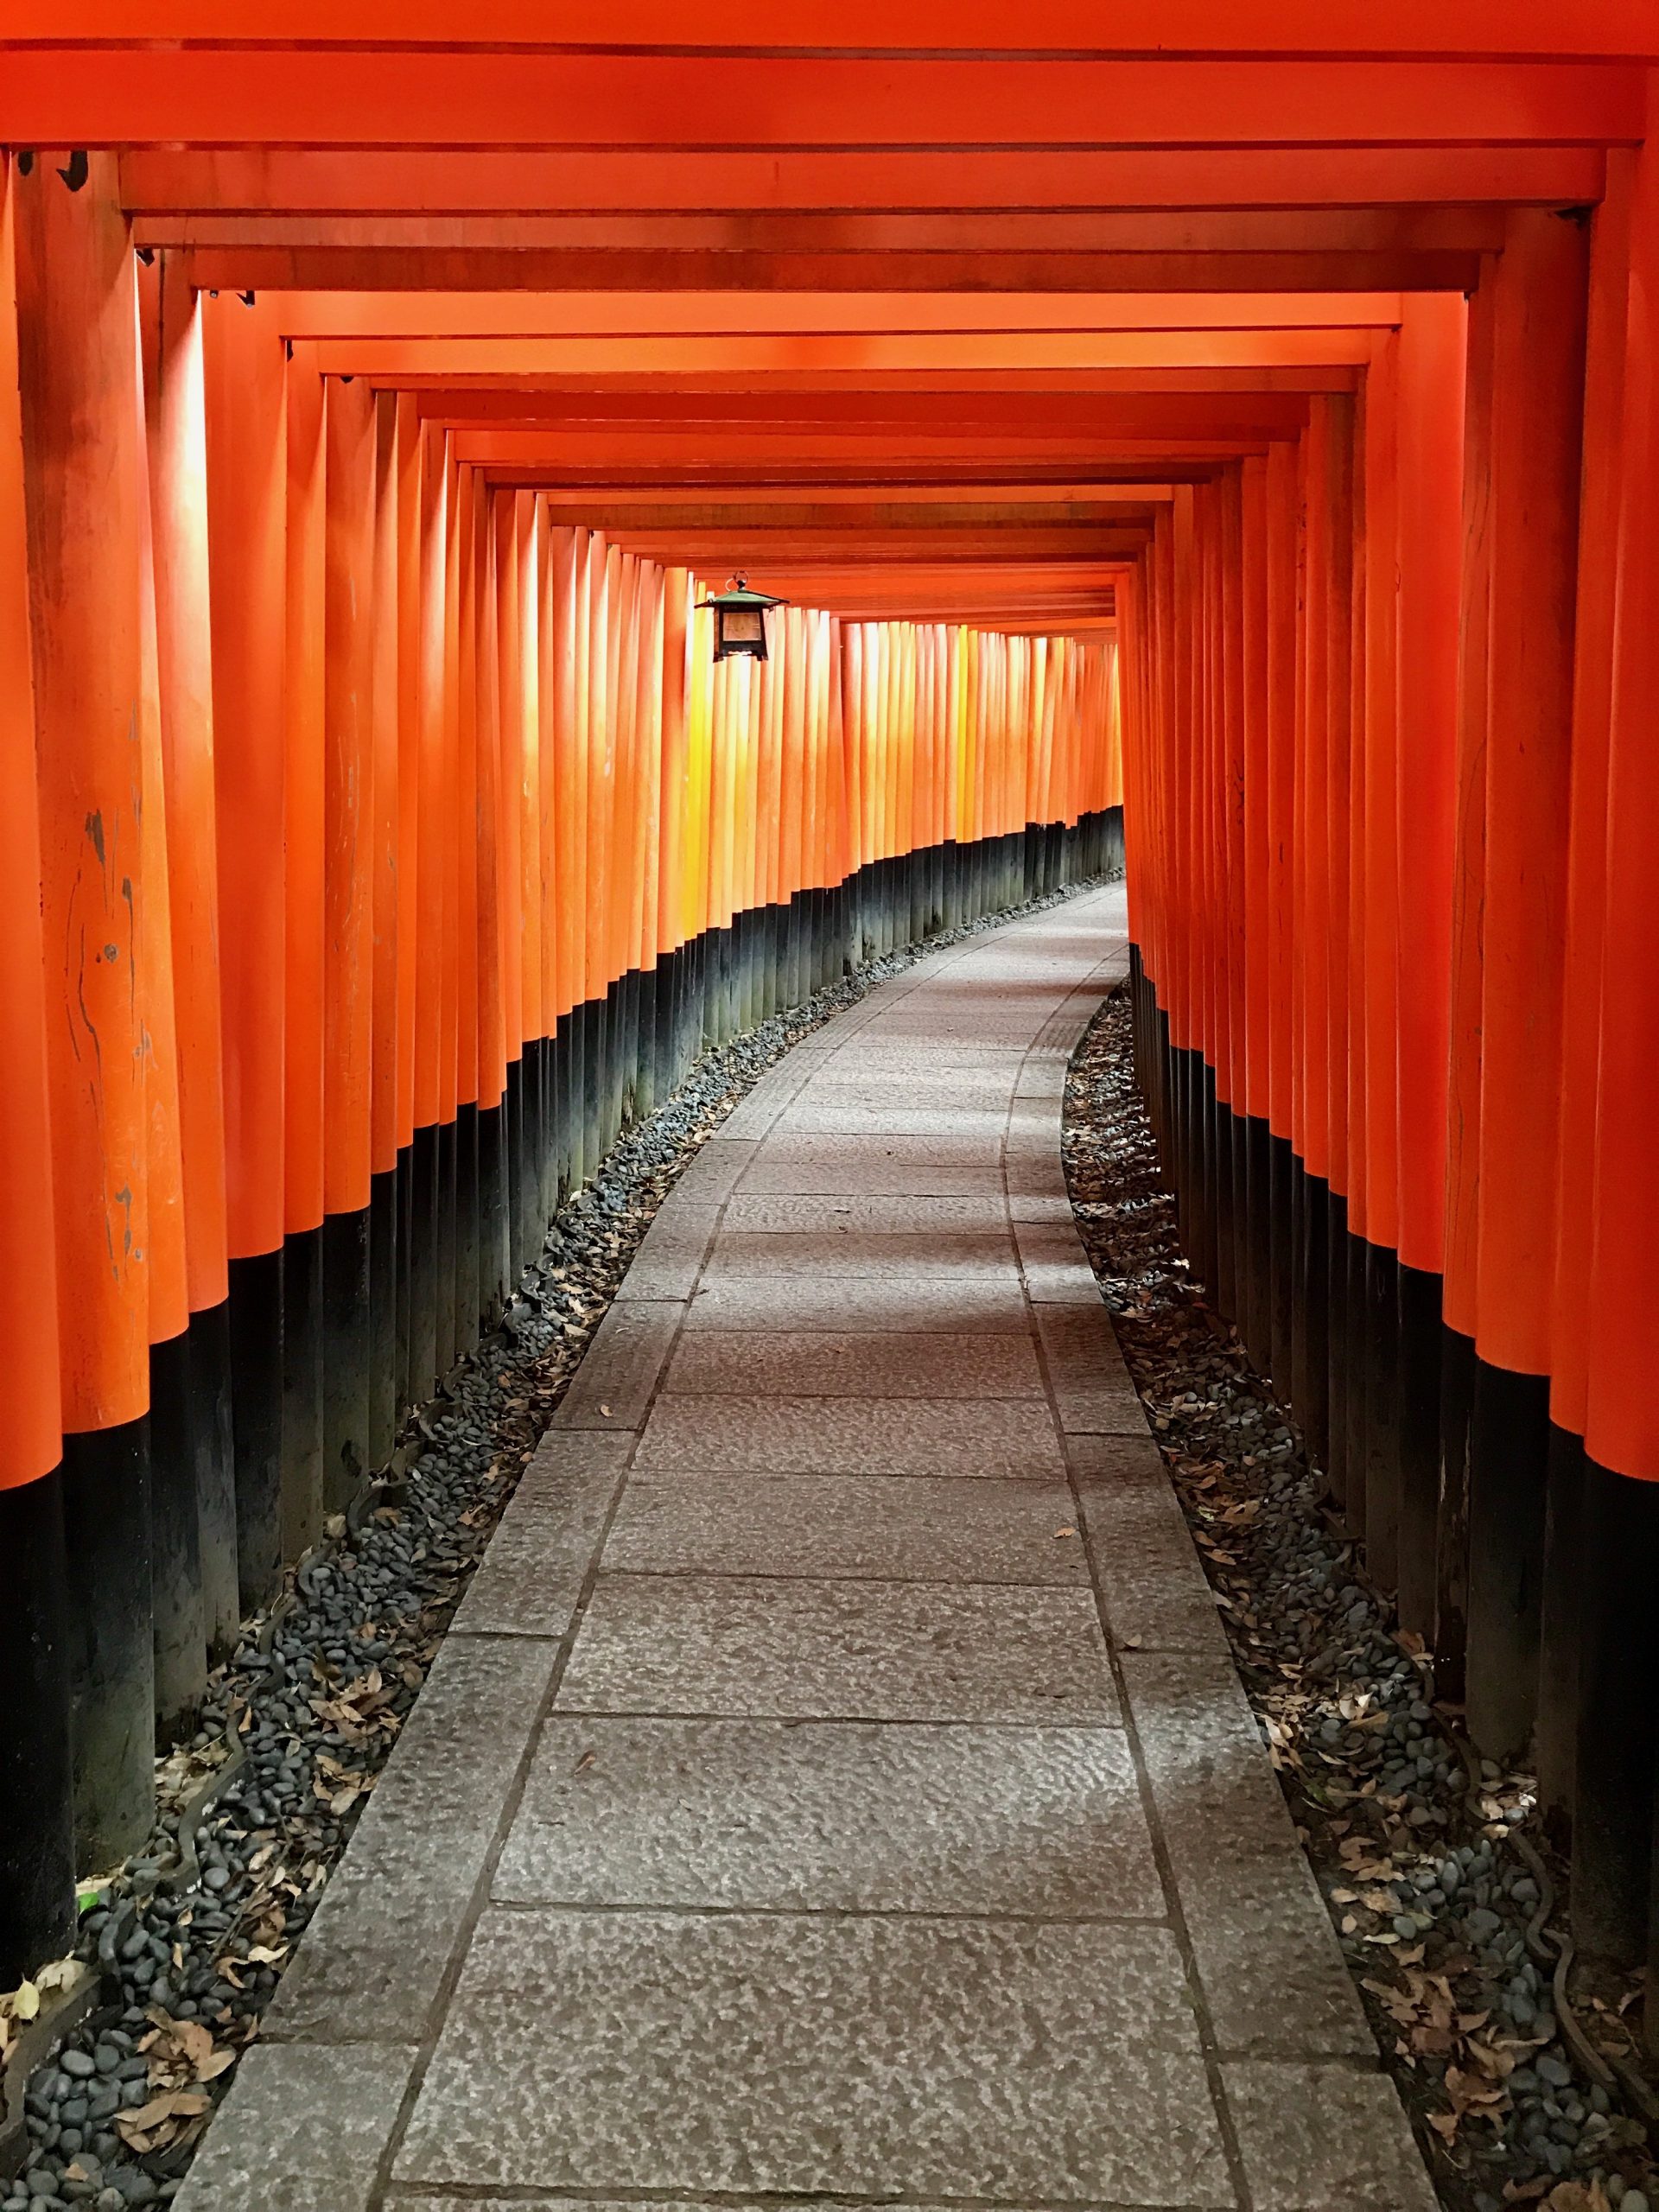 The Senbon Torii at Fushimi Inari Shrine